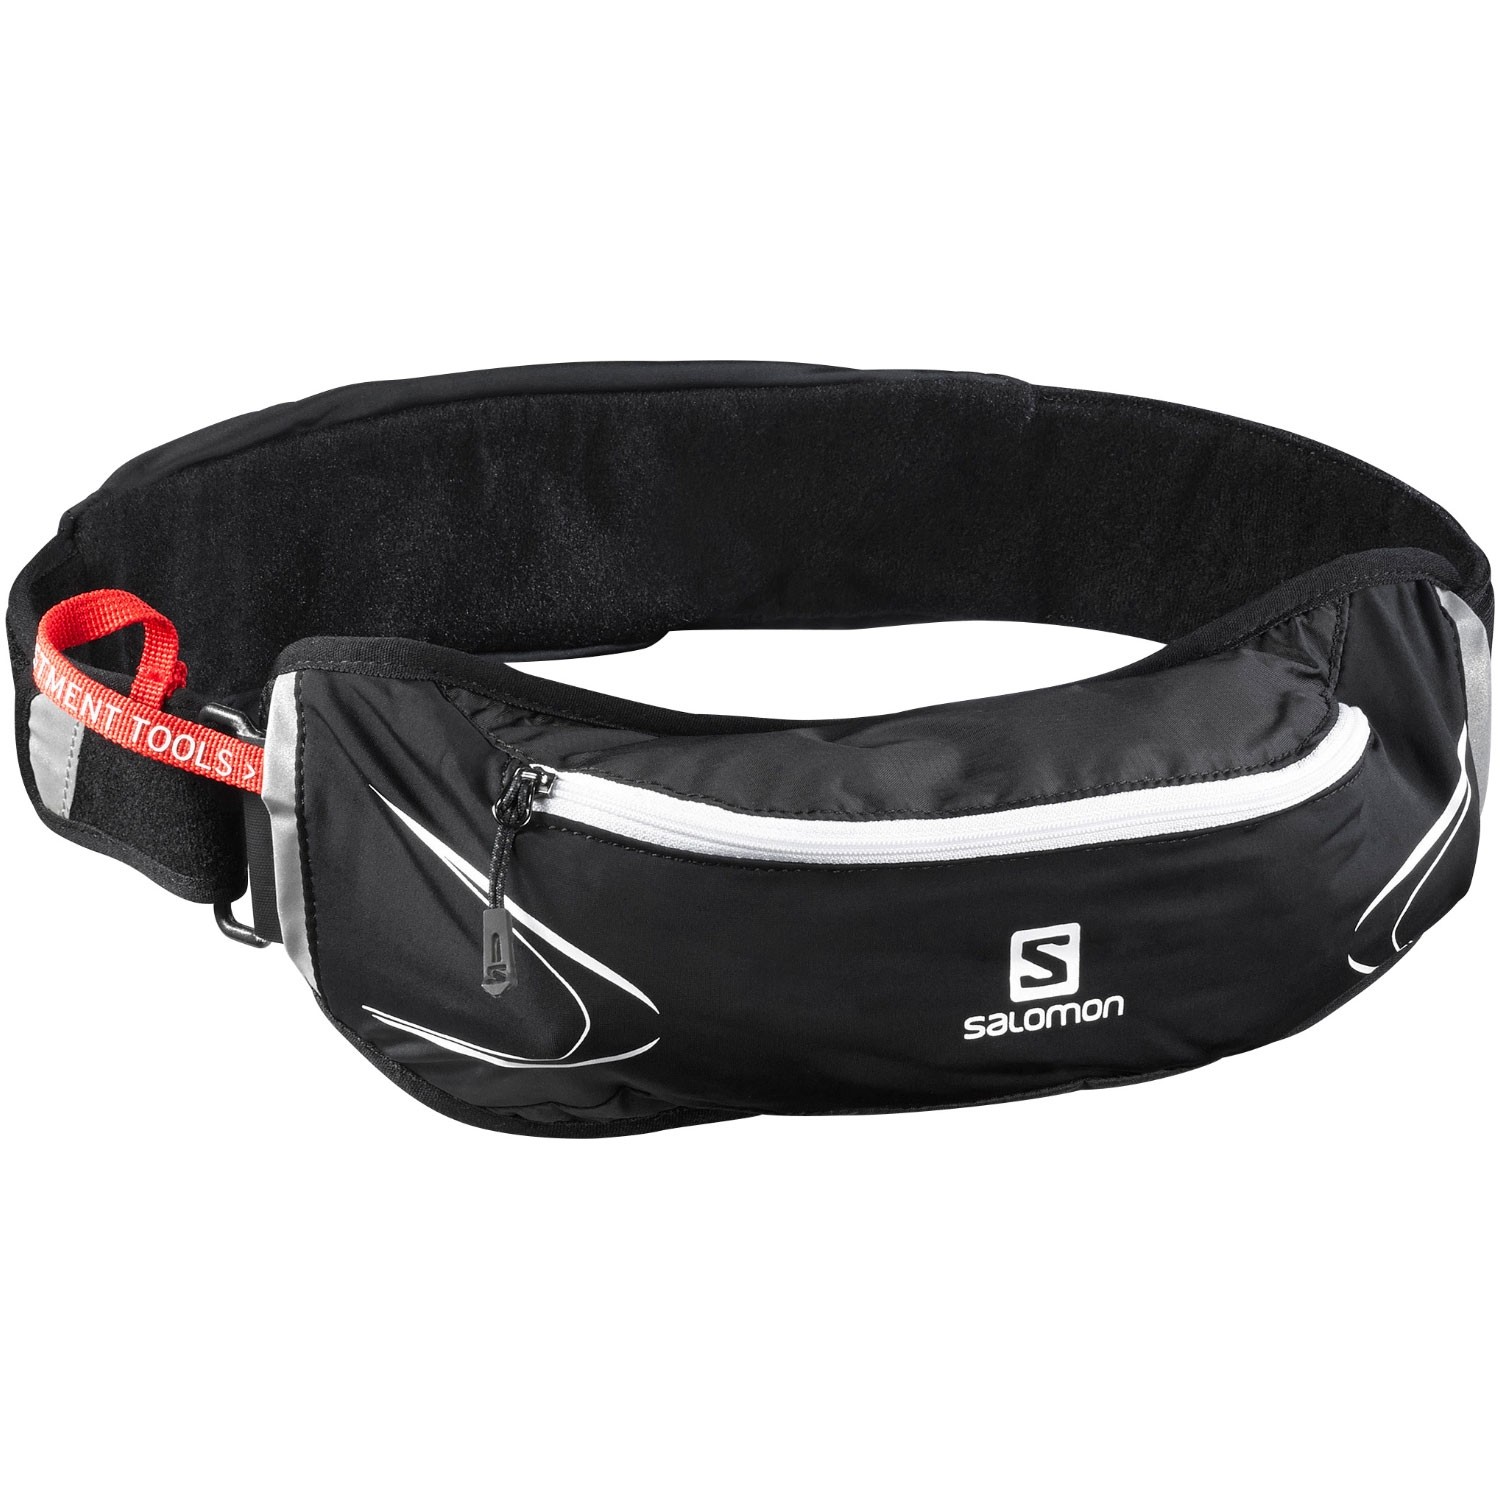 Salomon Agile 500 Belt Set - Black